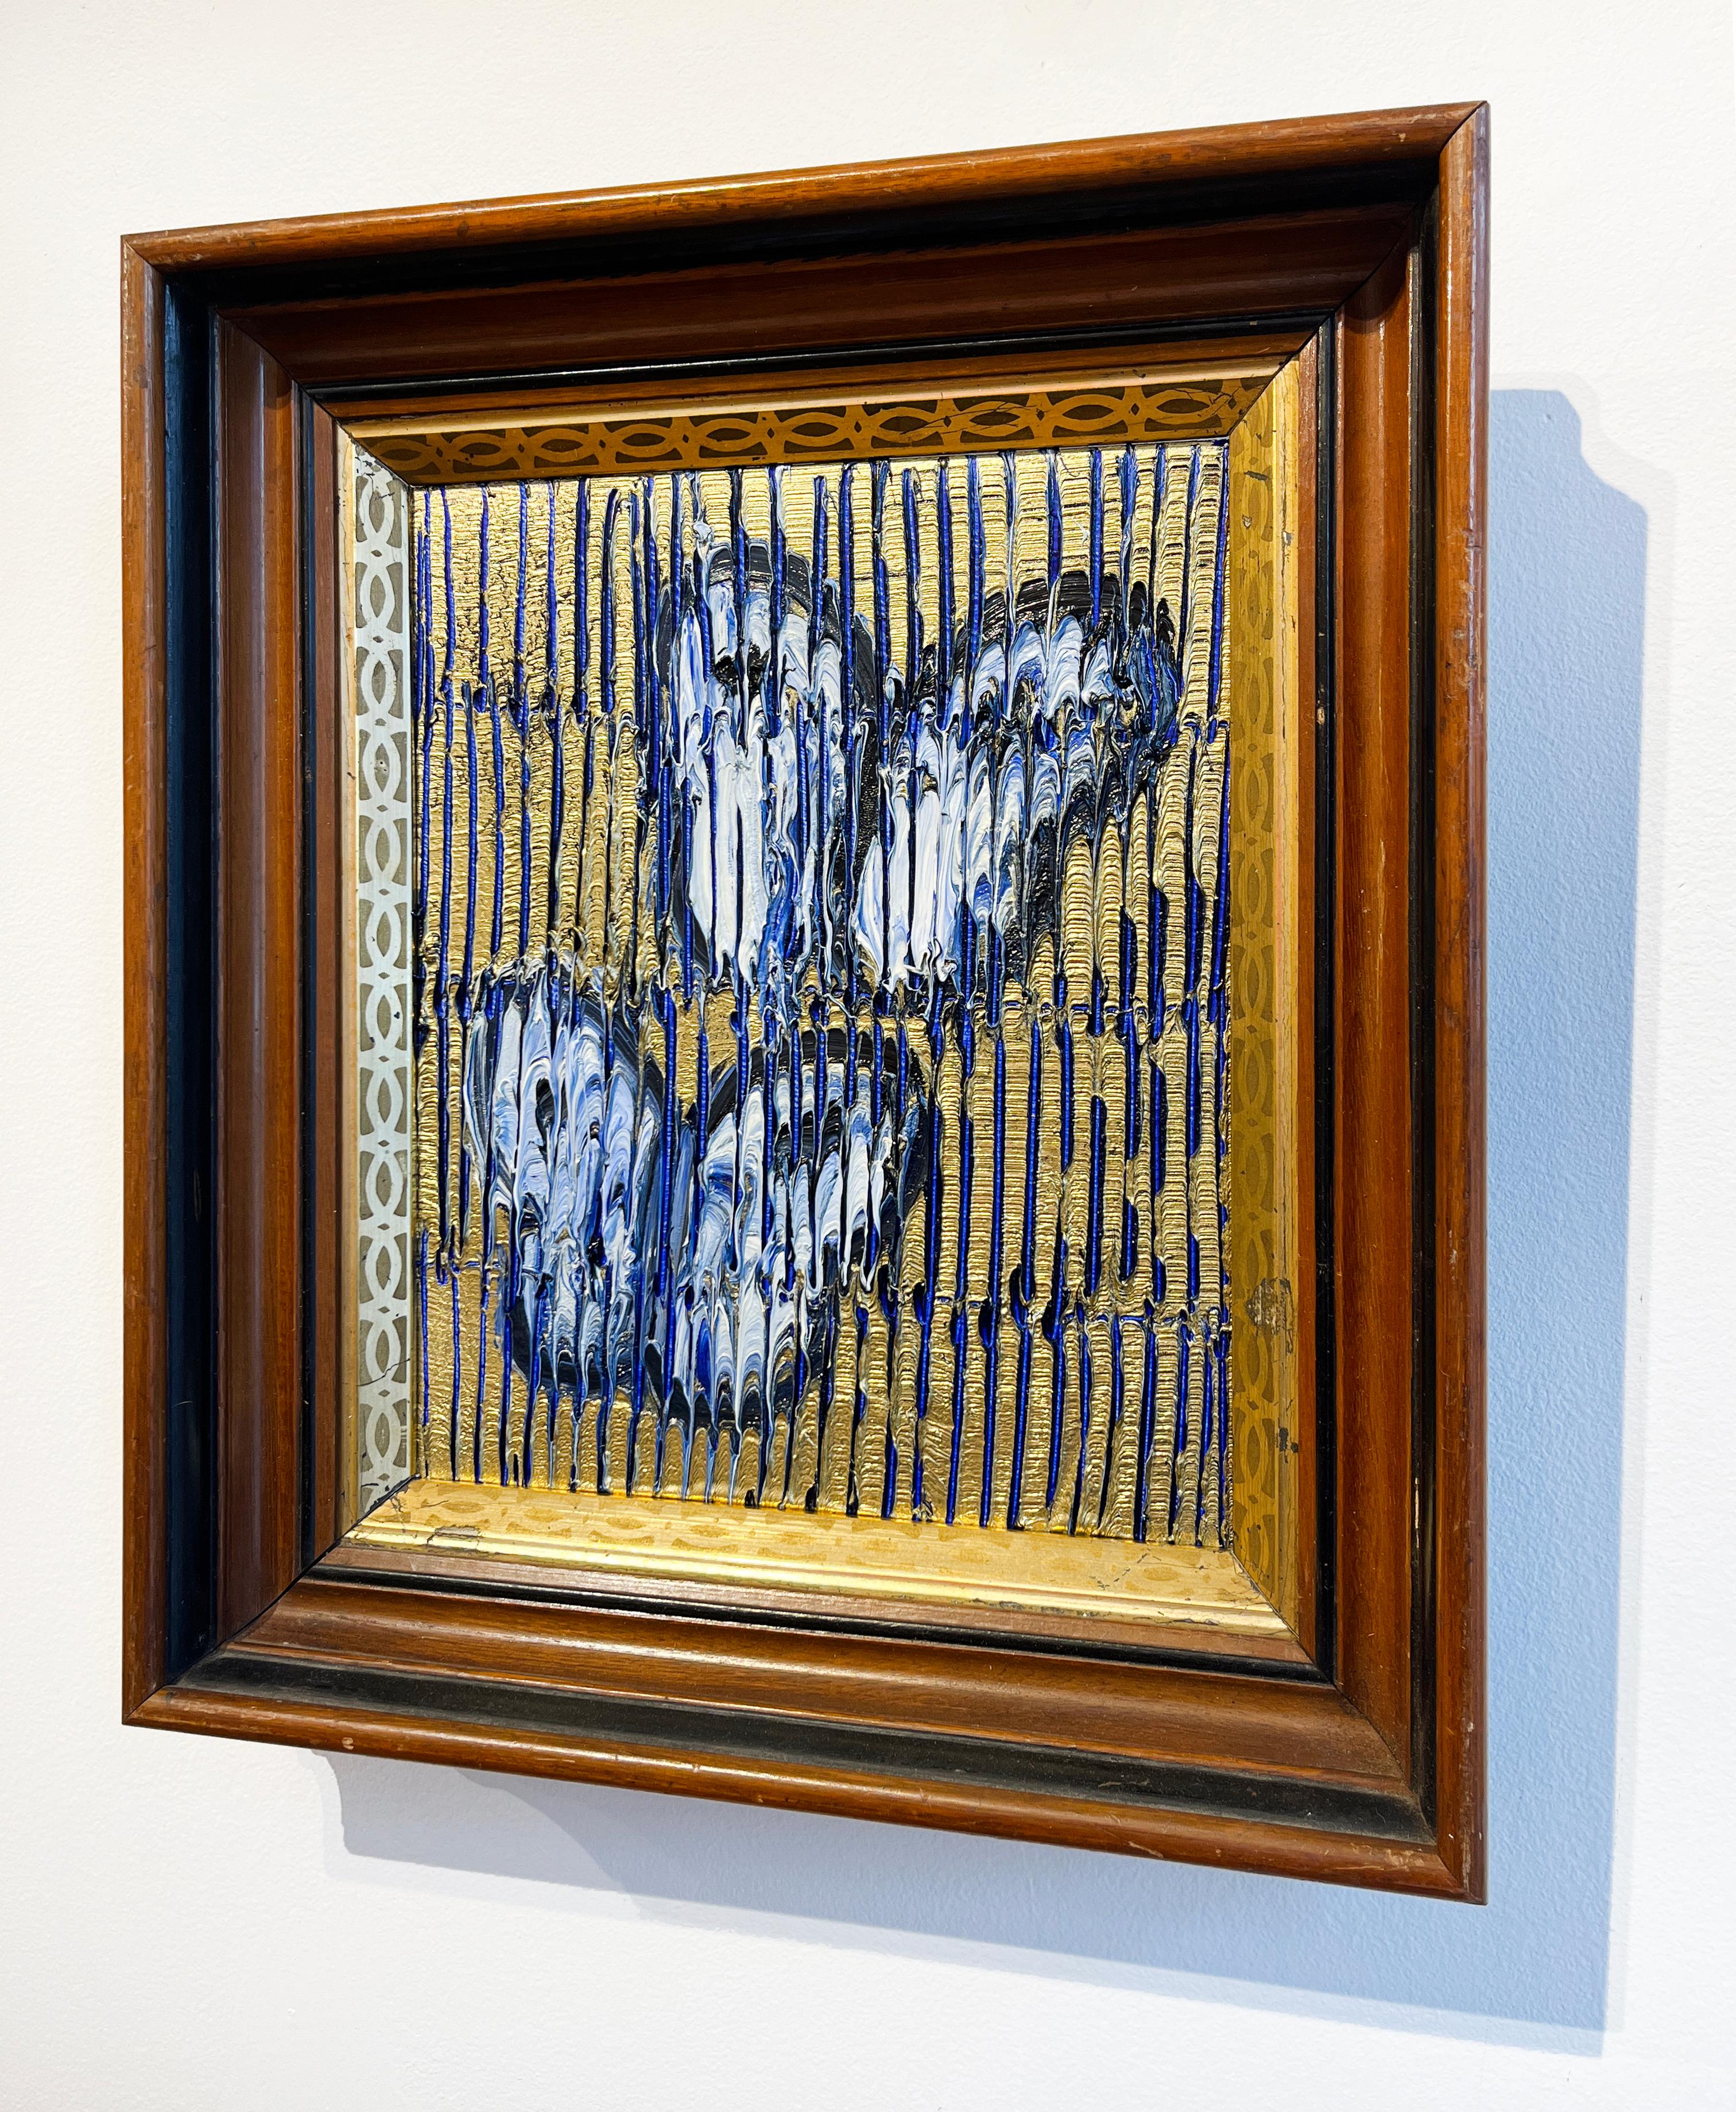 Artist:  Slonem, Hunt
Title:  Maine Flight
Series:  Butterflies
Date:  2023
Medium:  Oil on wood
Unframed Dimensions:  10